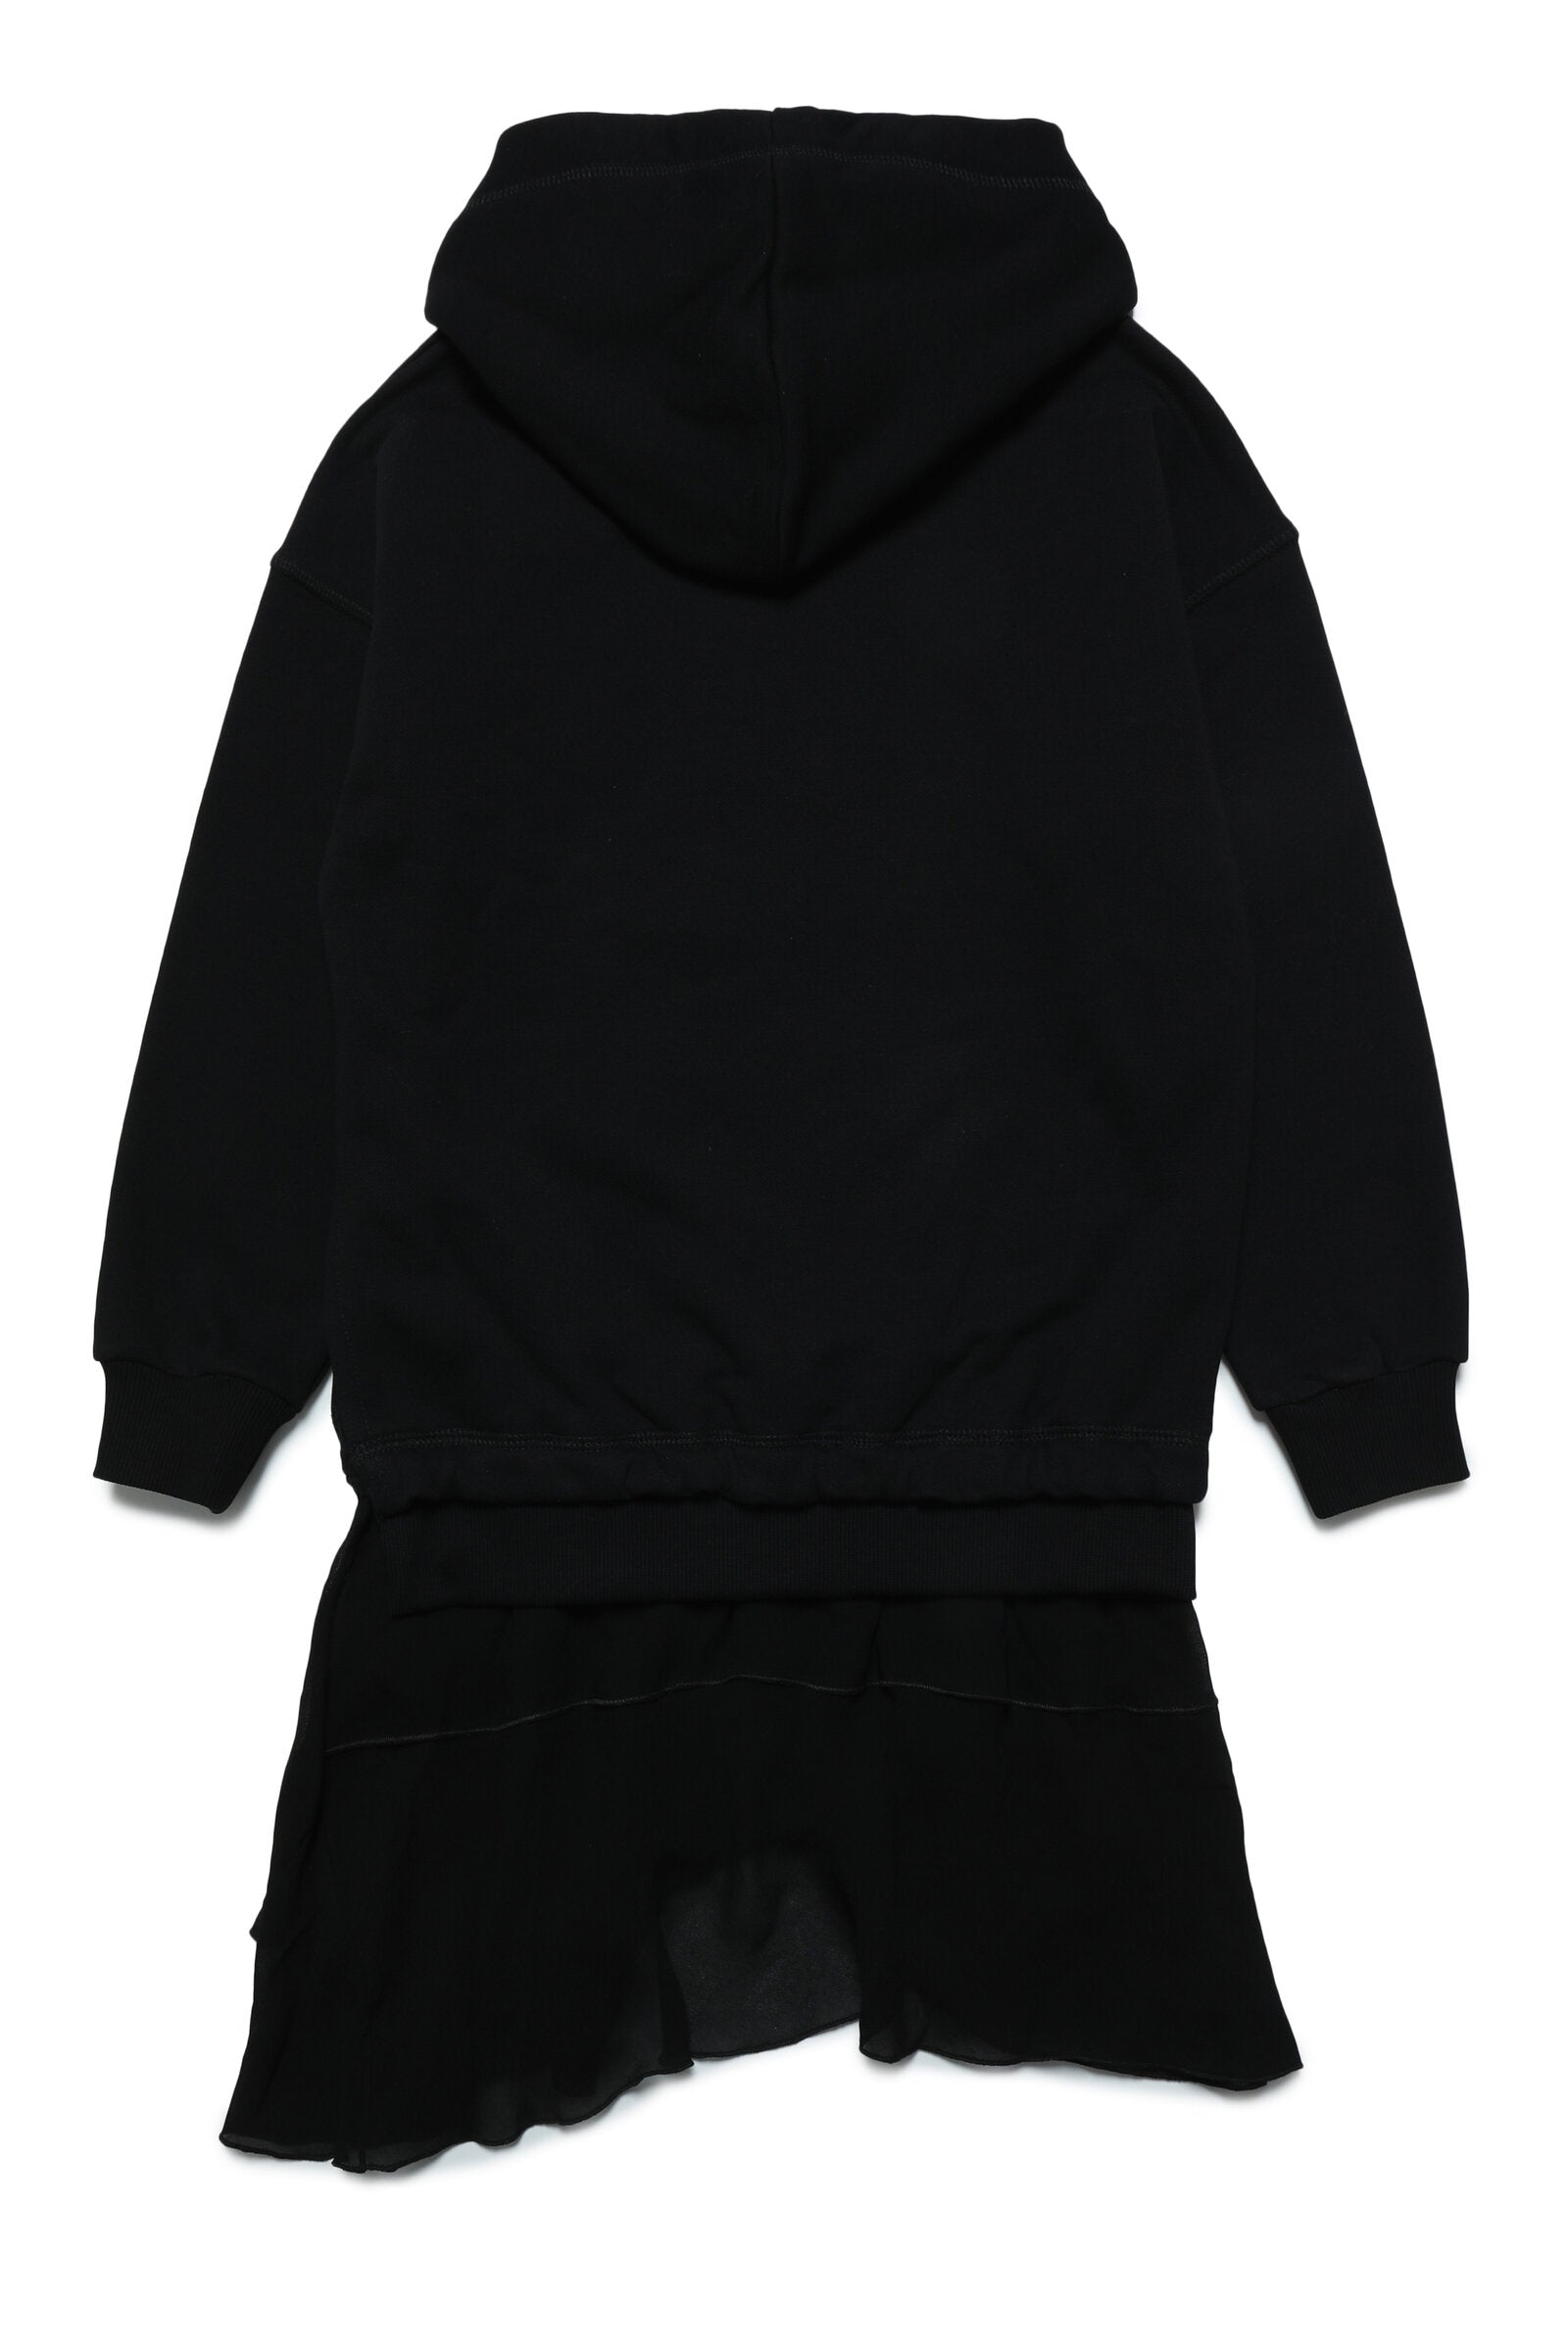 Chiffon hooded sweatshirt dress with Oval D logo